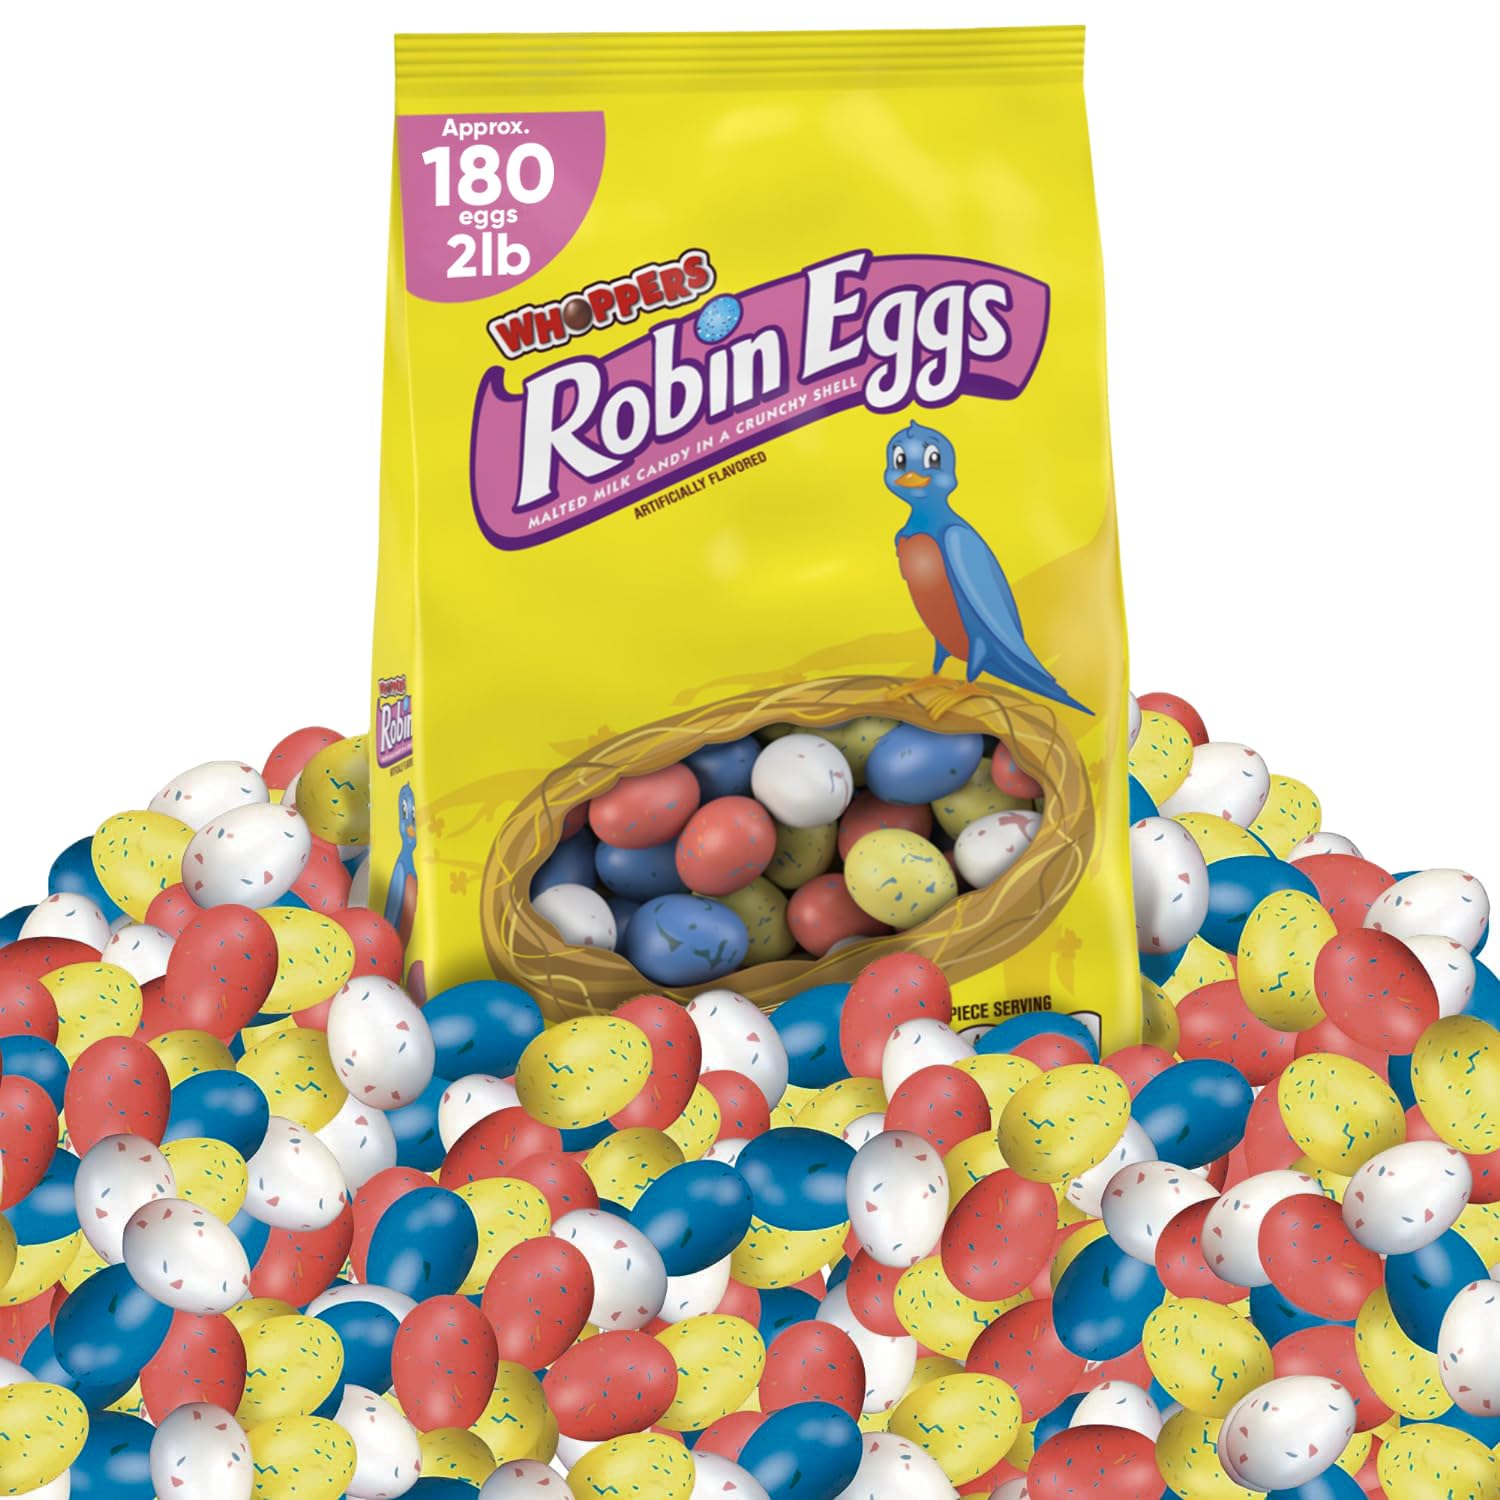 WHOPPERS Robin Eggs Malted Milk Candy, 32oz Bag Easter Candy Treats Bulk (2 Pound Bulk)